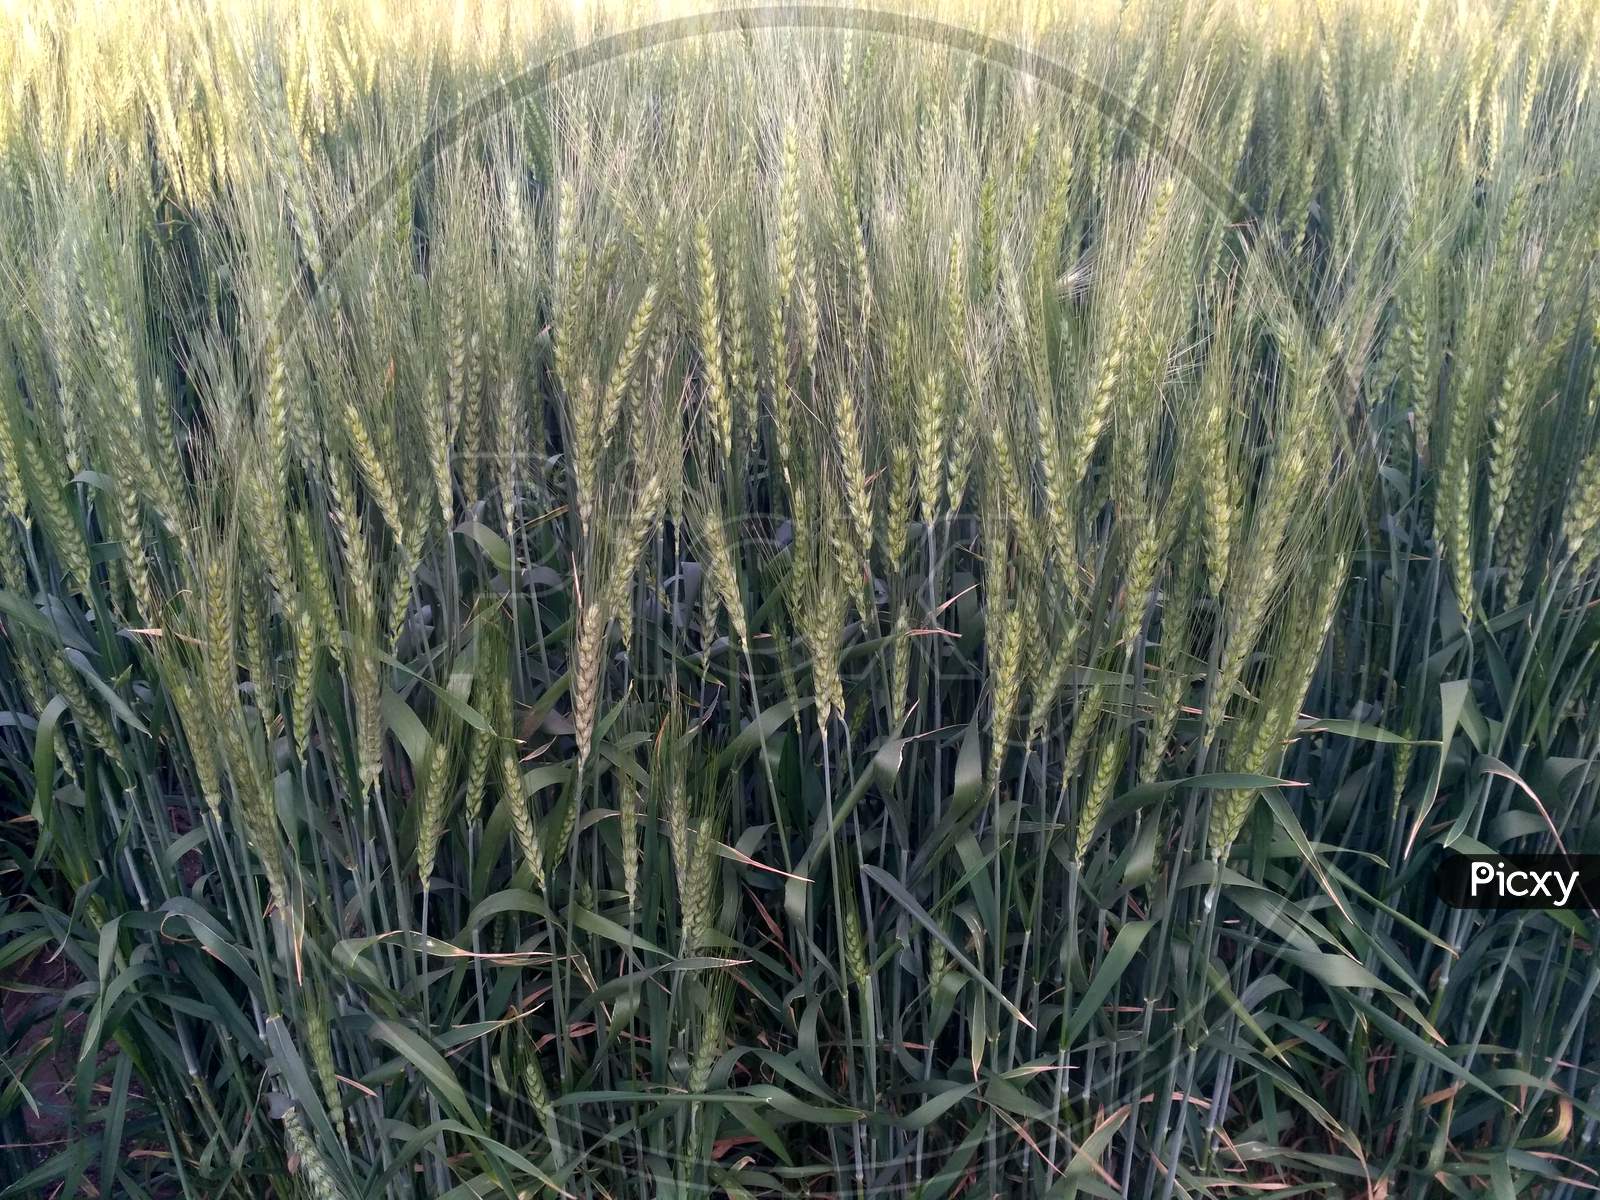 barley vs wheat plant